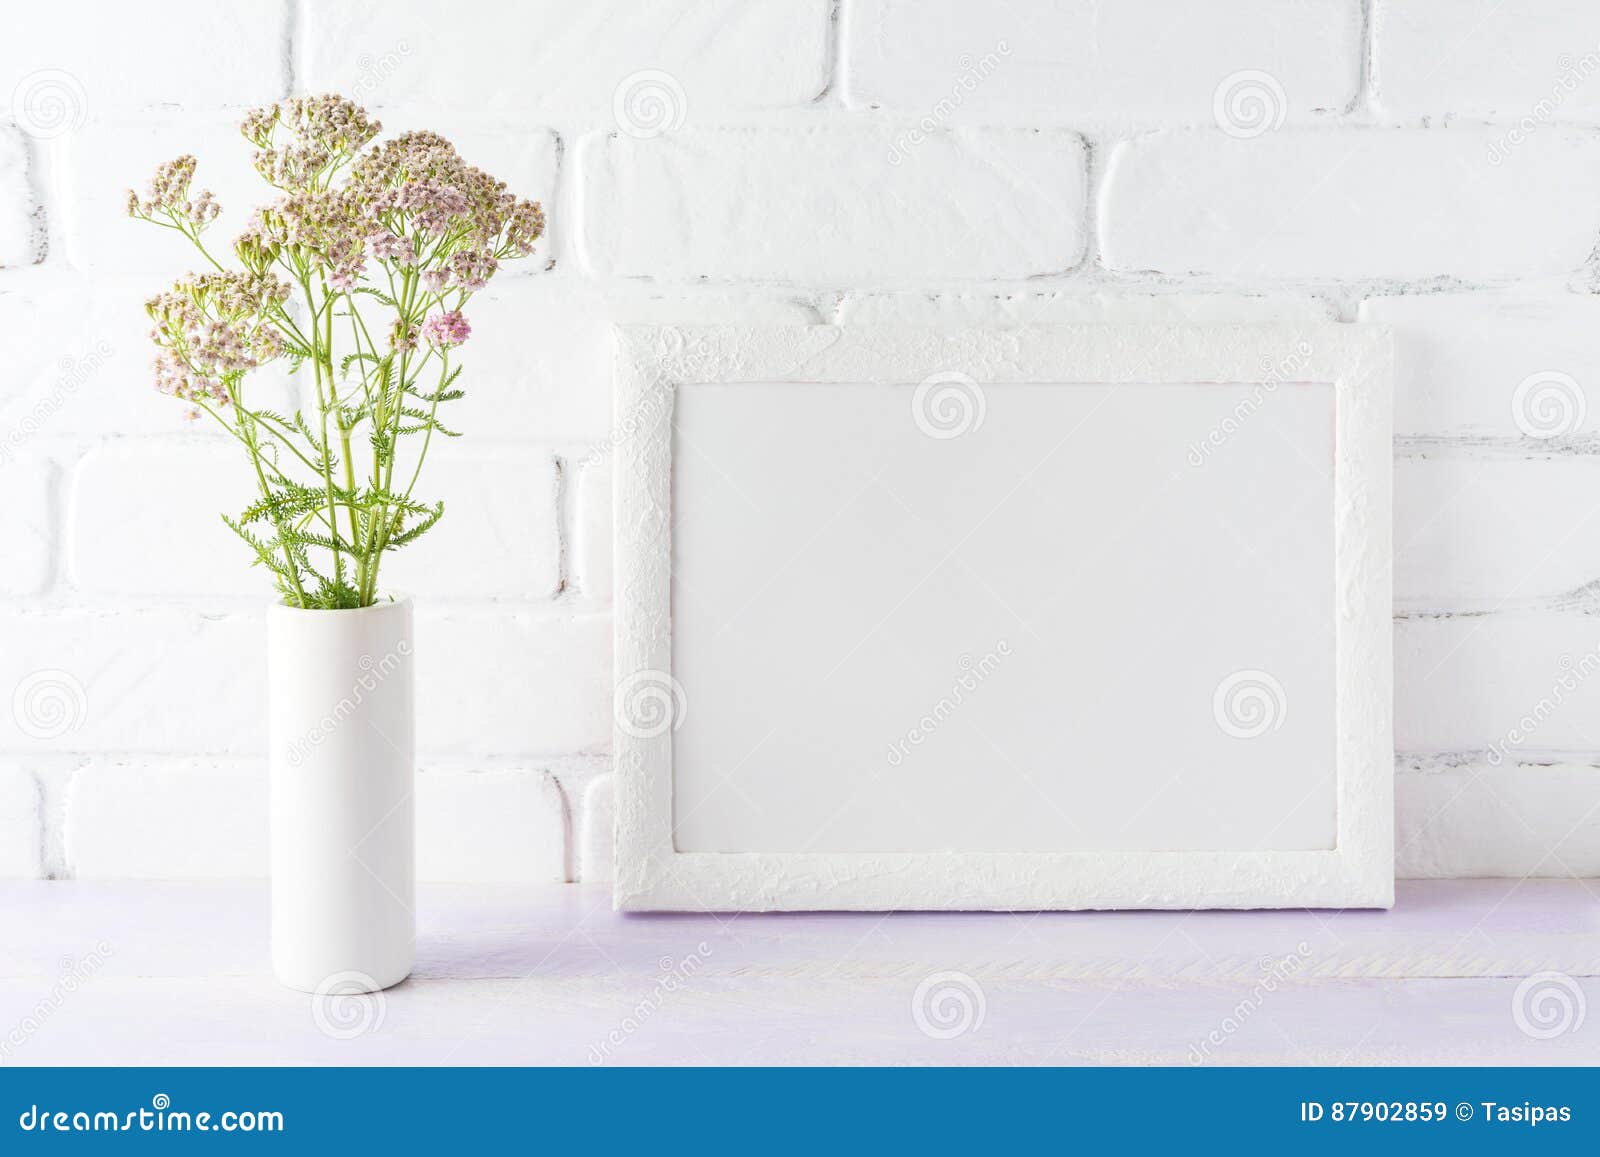 https://thumbs.dreamstime.com/z/white-landscape-frame-mockup-creamy-pink-flowers-cylinder-vas-vase-near-painted-brick-wall-empty-mock-up-87902859.jpg